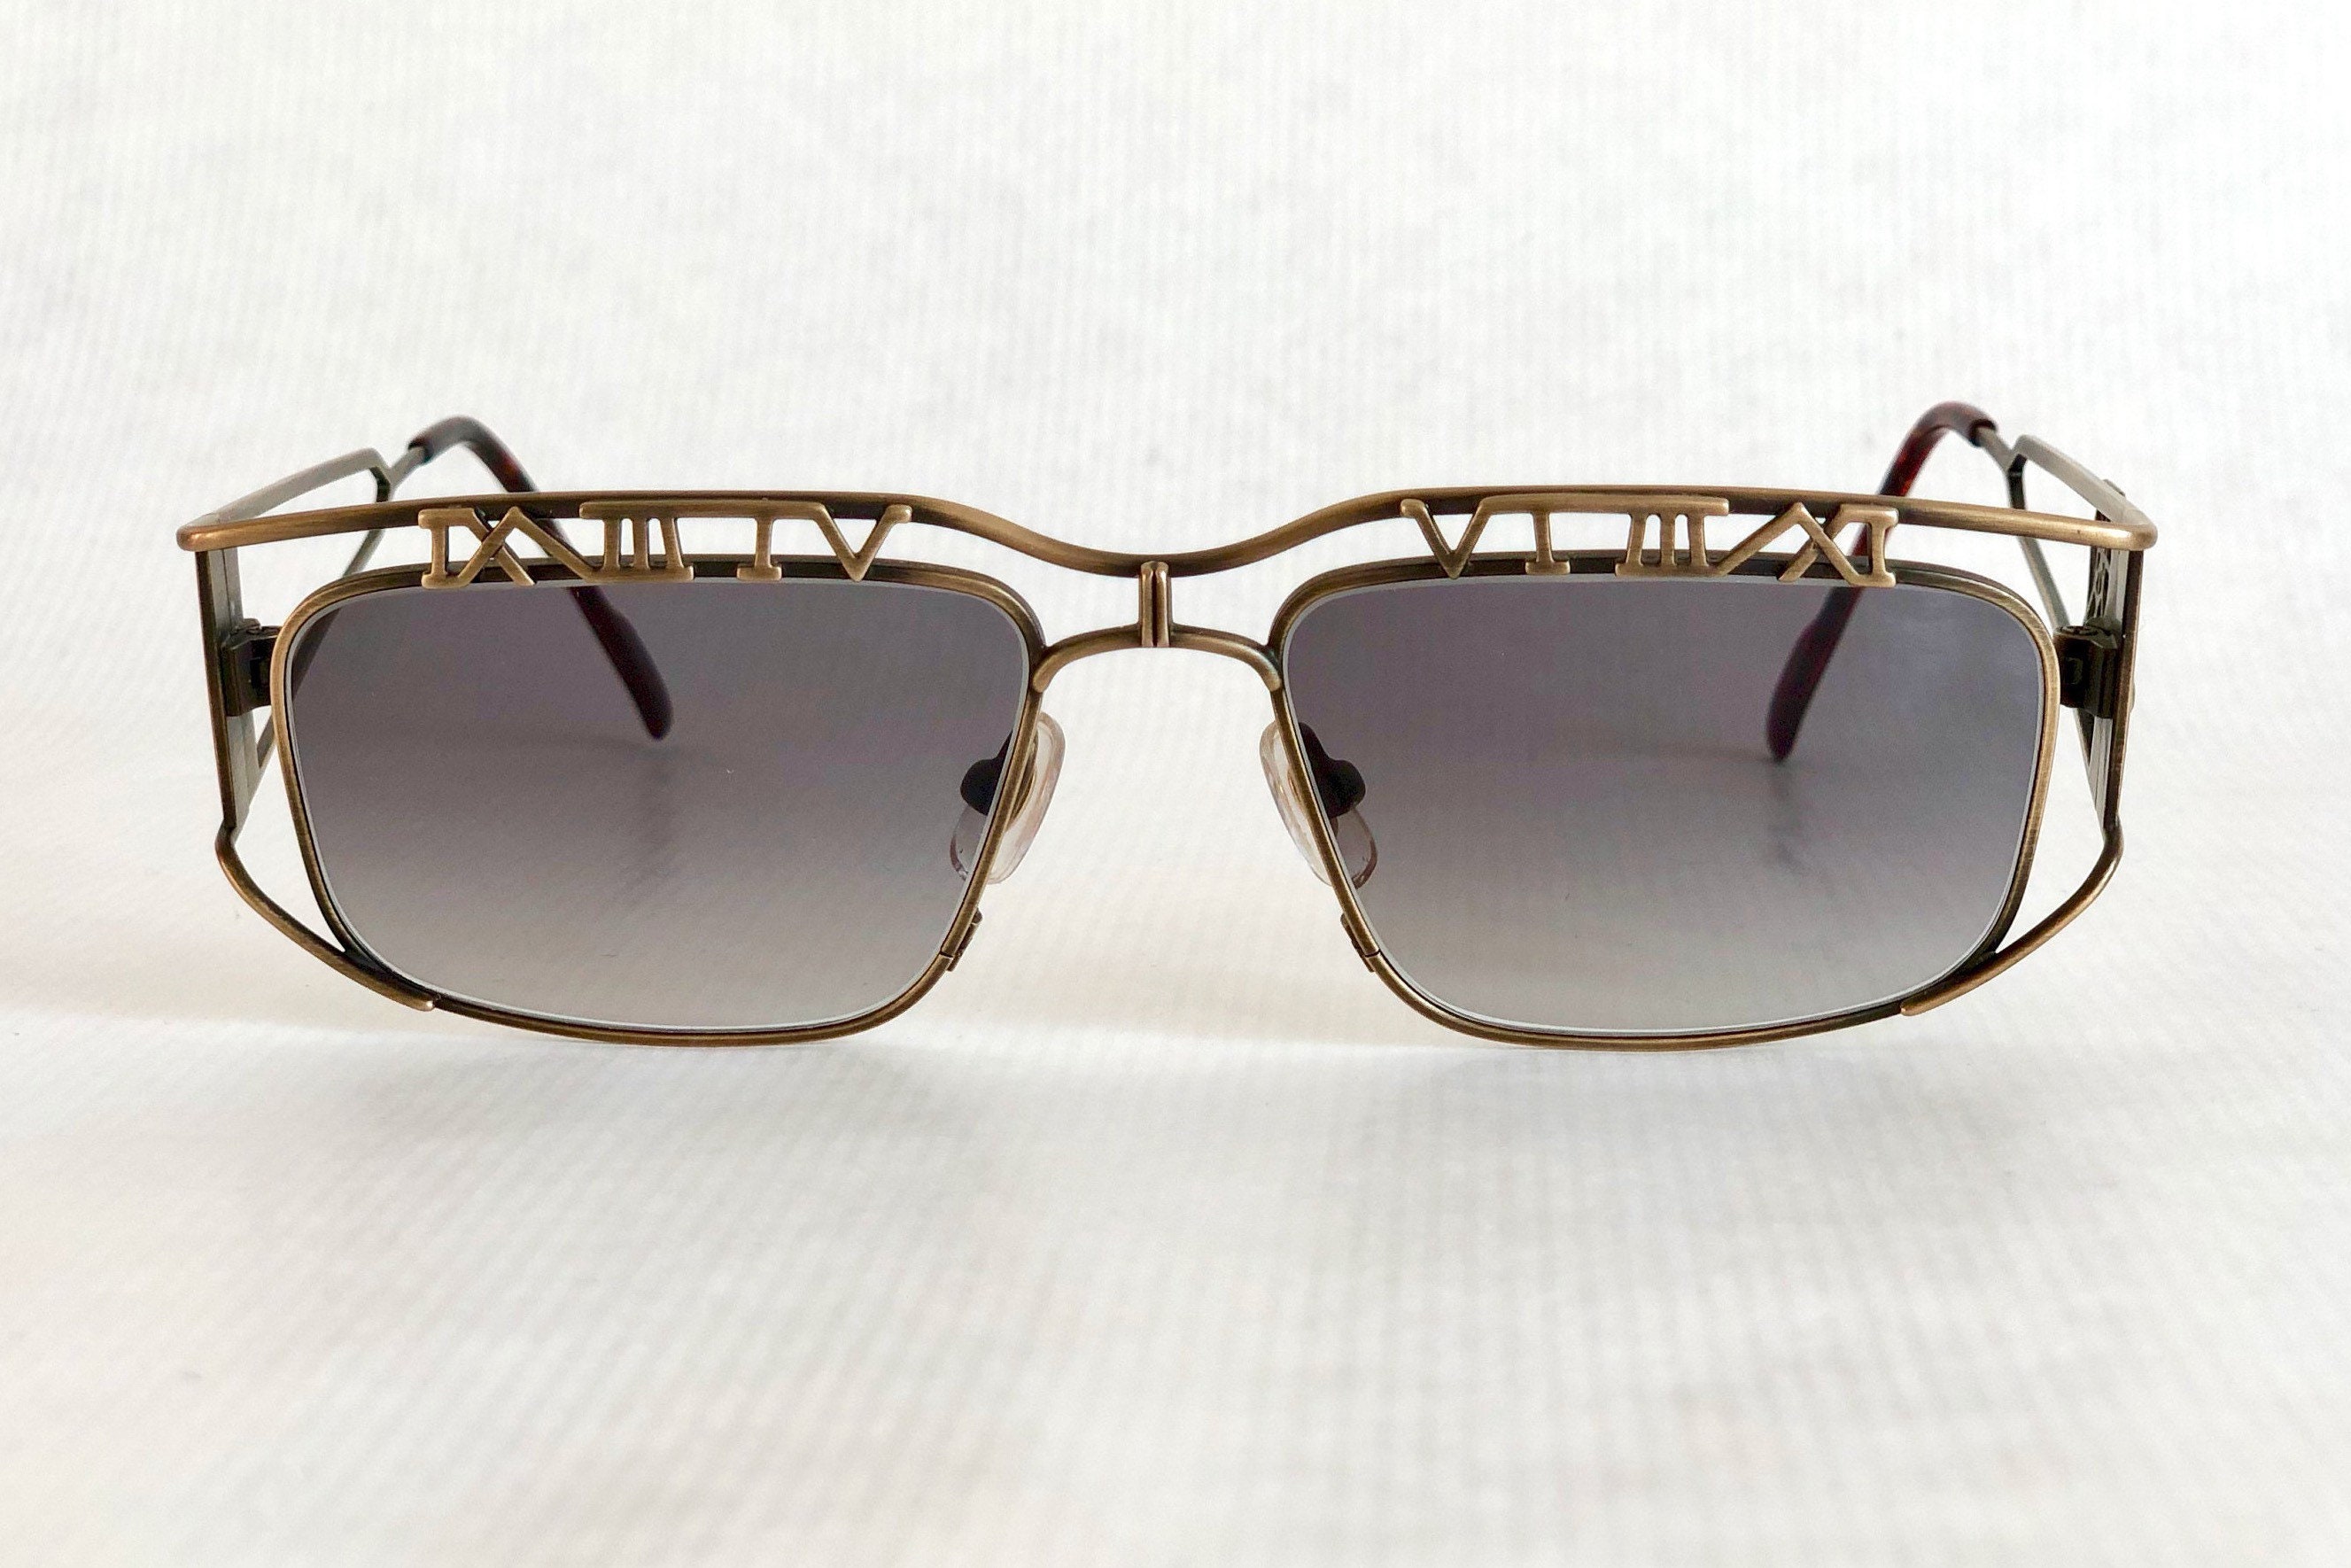 Kouré KR 8090 Vintage Sunglasses – New Old Stock – Made in South Korea